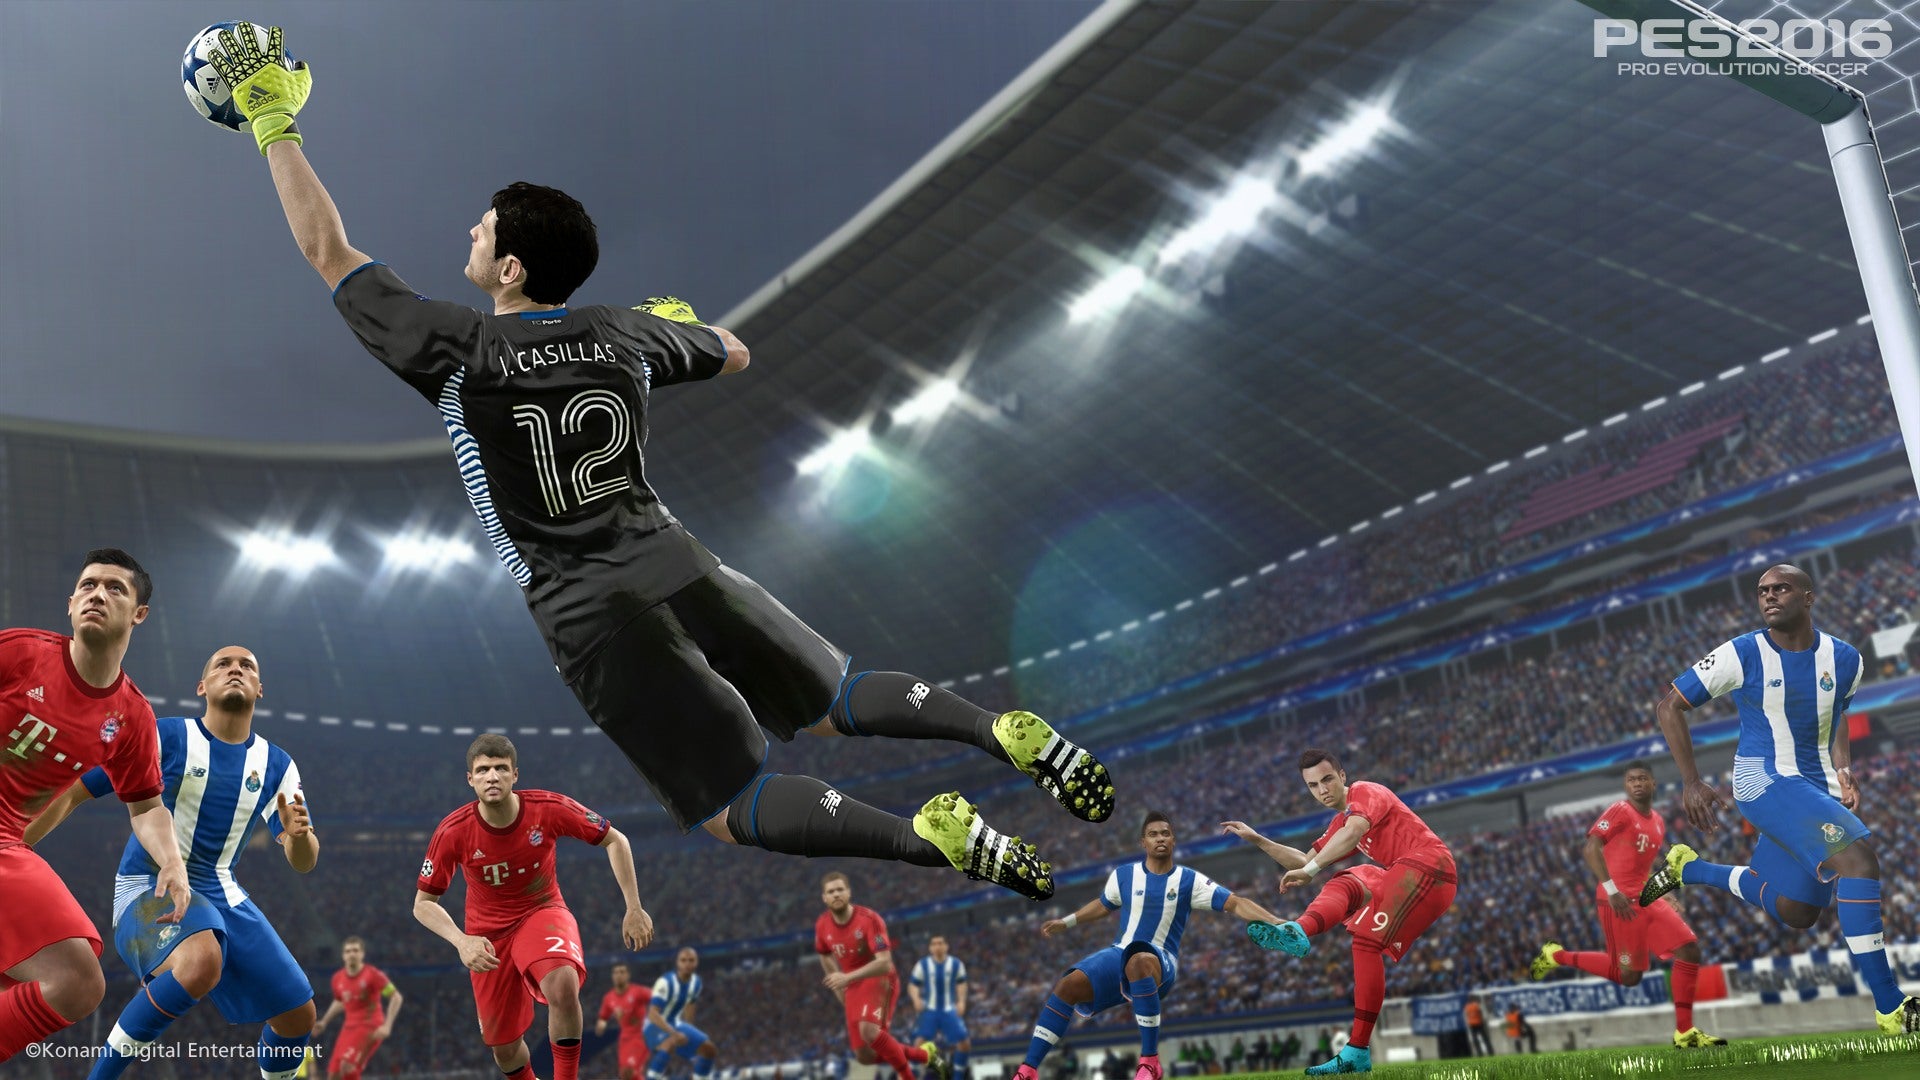 Pro Evolution Soccer - gry piłkarze Mundial w Katarze